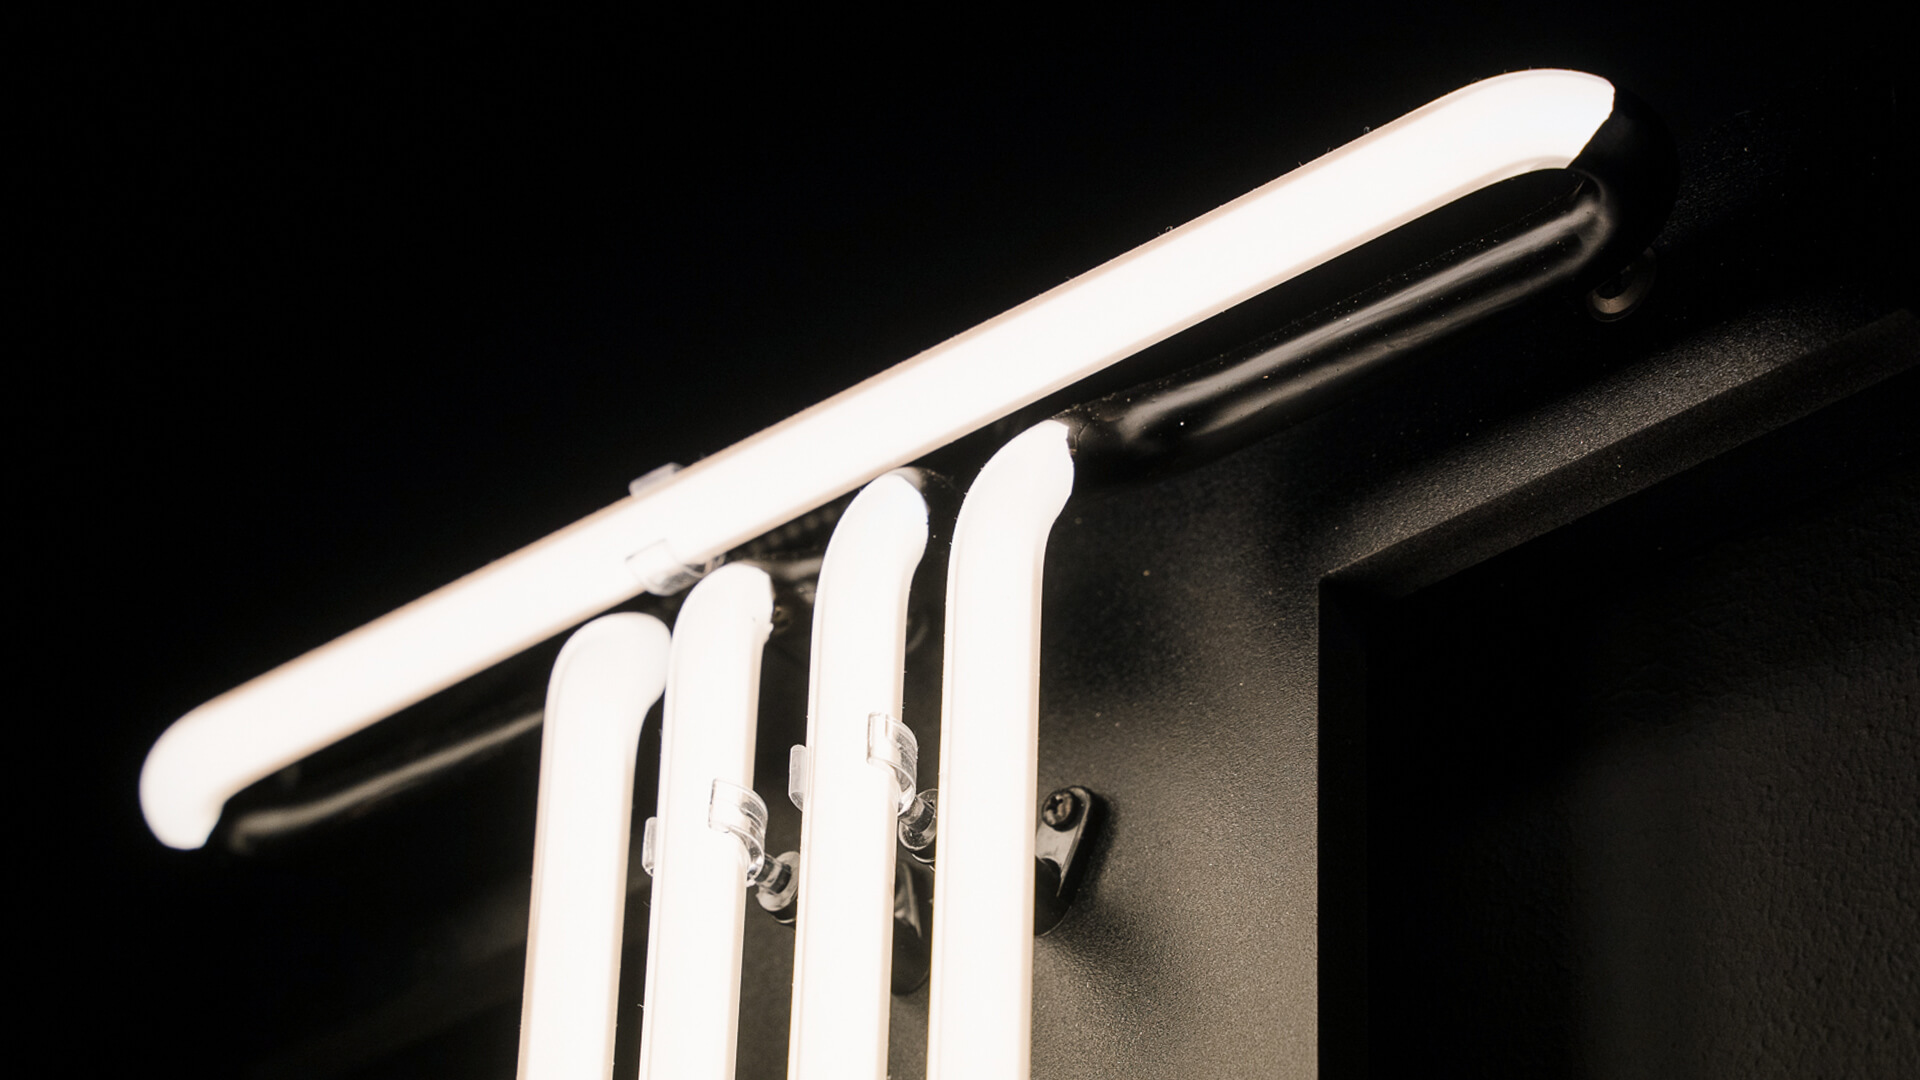 Neon Tamara Lempicka - Witte neutrale neon.